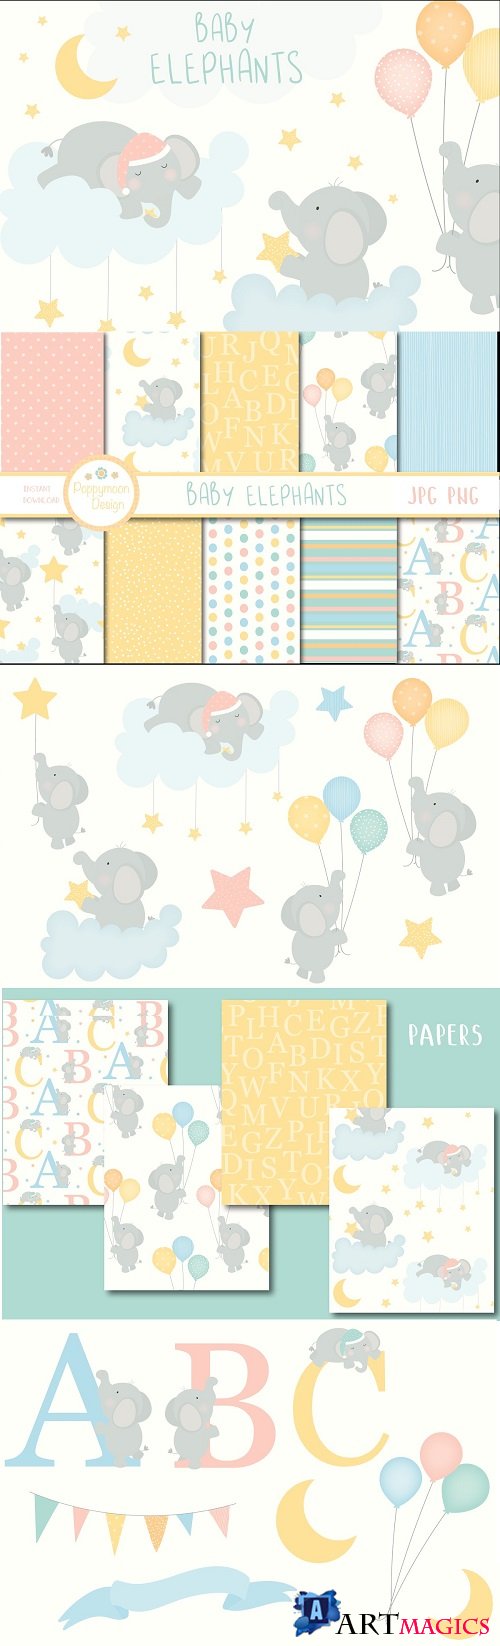 Baby Elephant set (clipart + paper) - 3816666 - 3816667